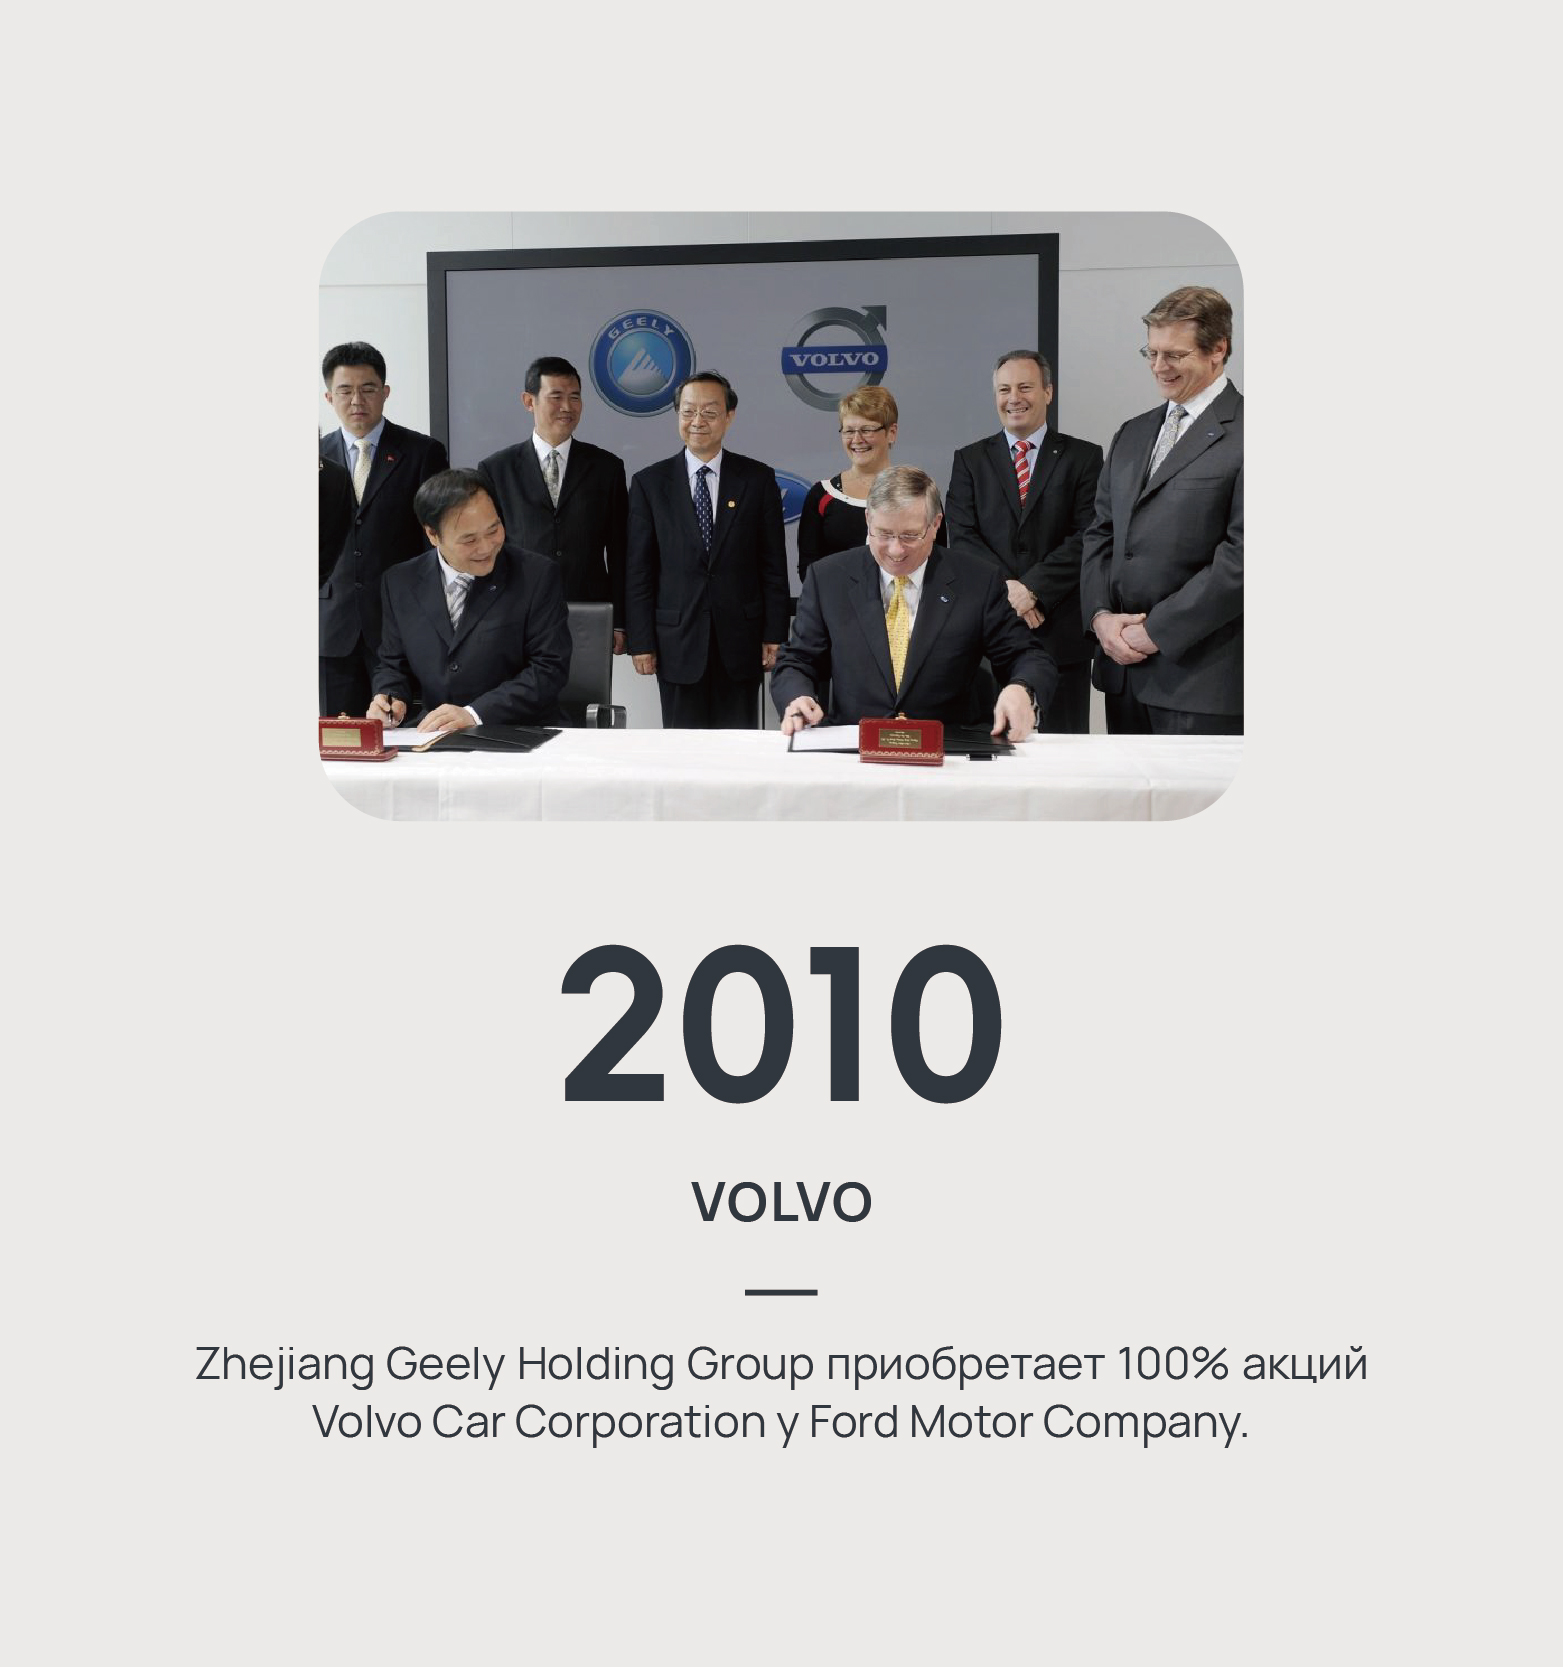 2010 - Volvo